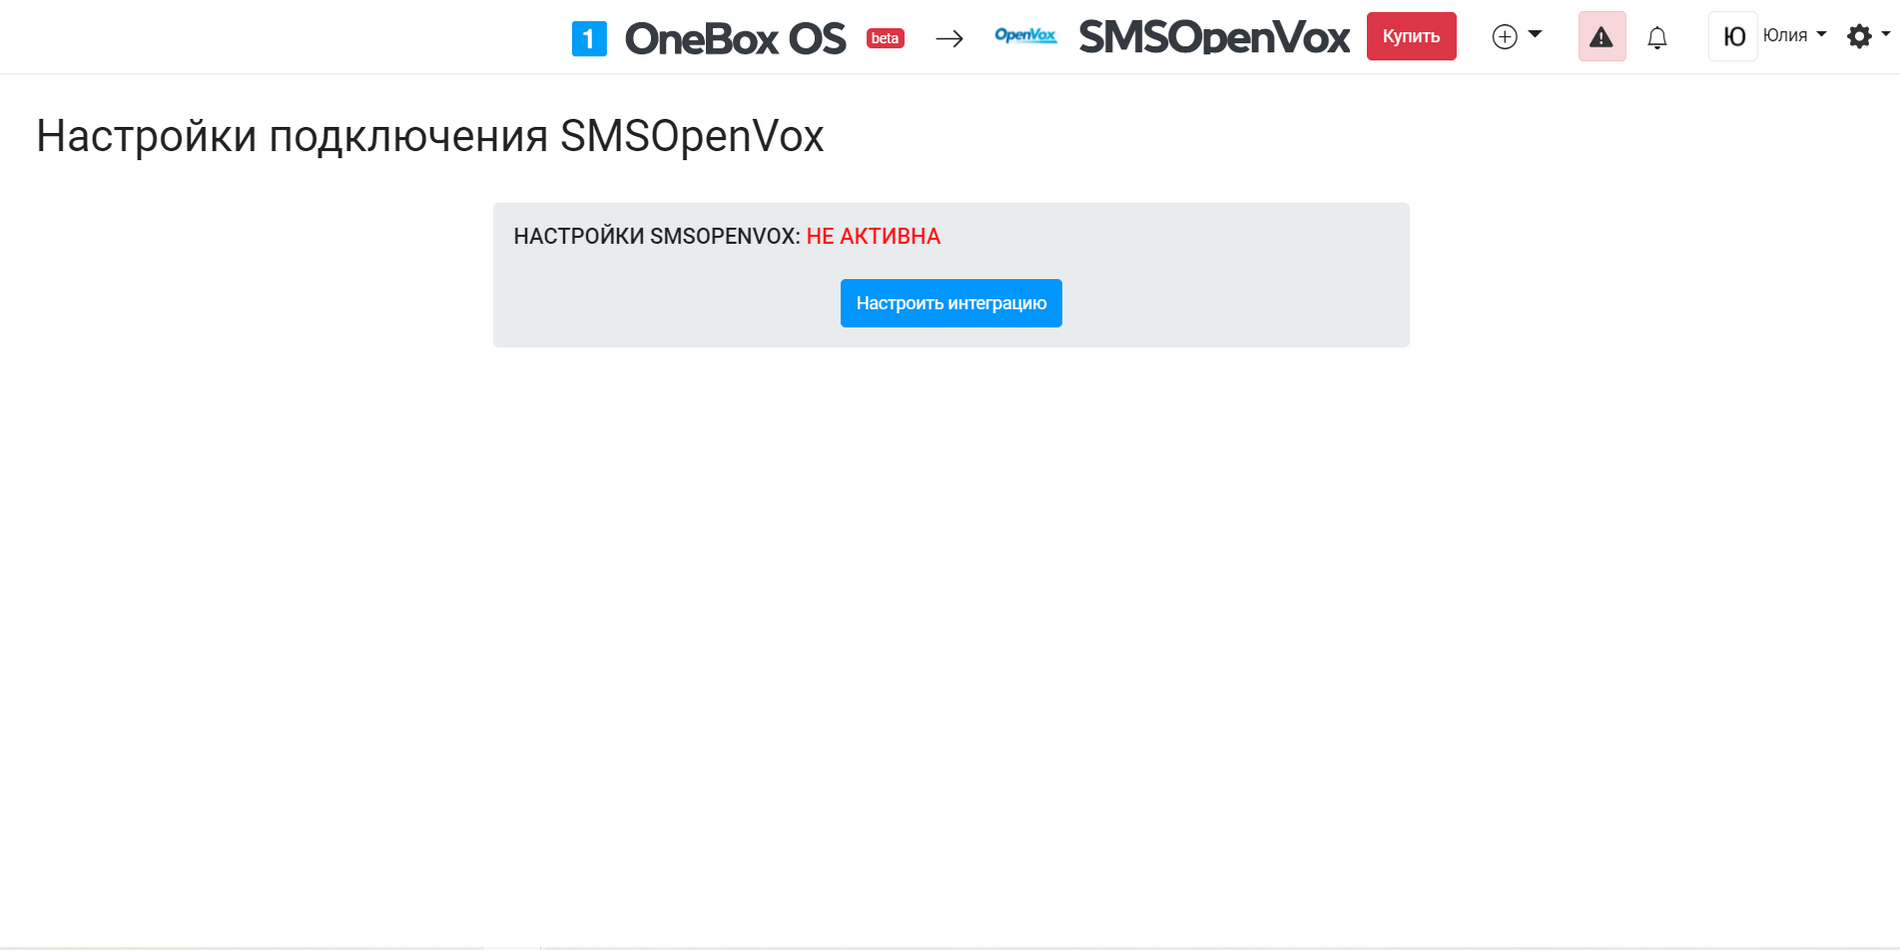 Приложение SMSOpenVox